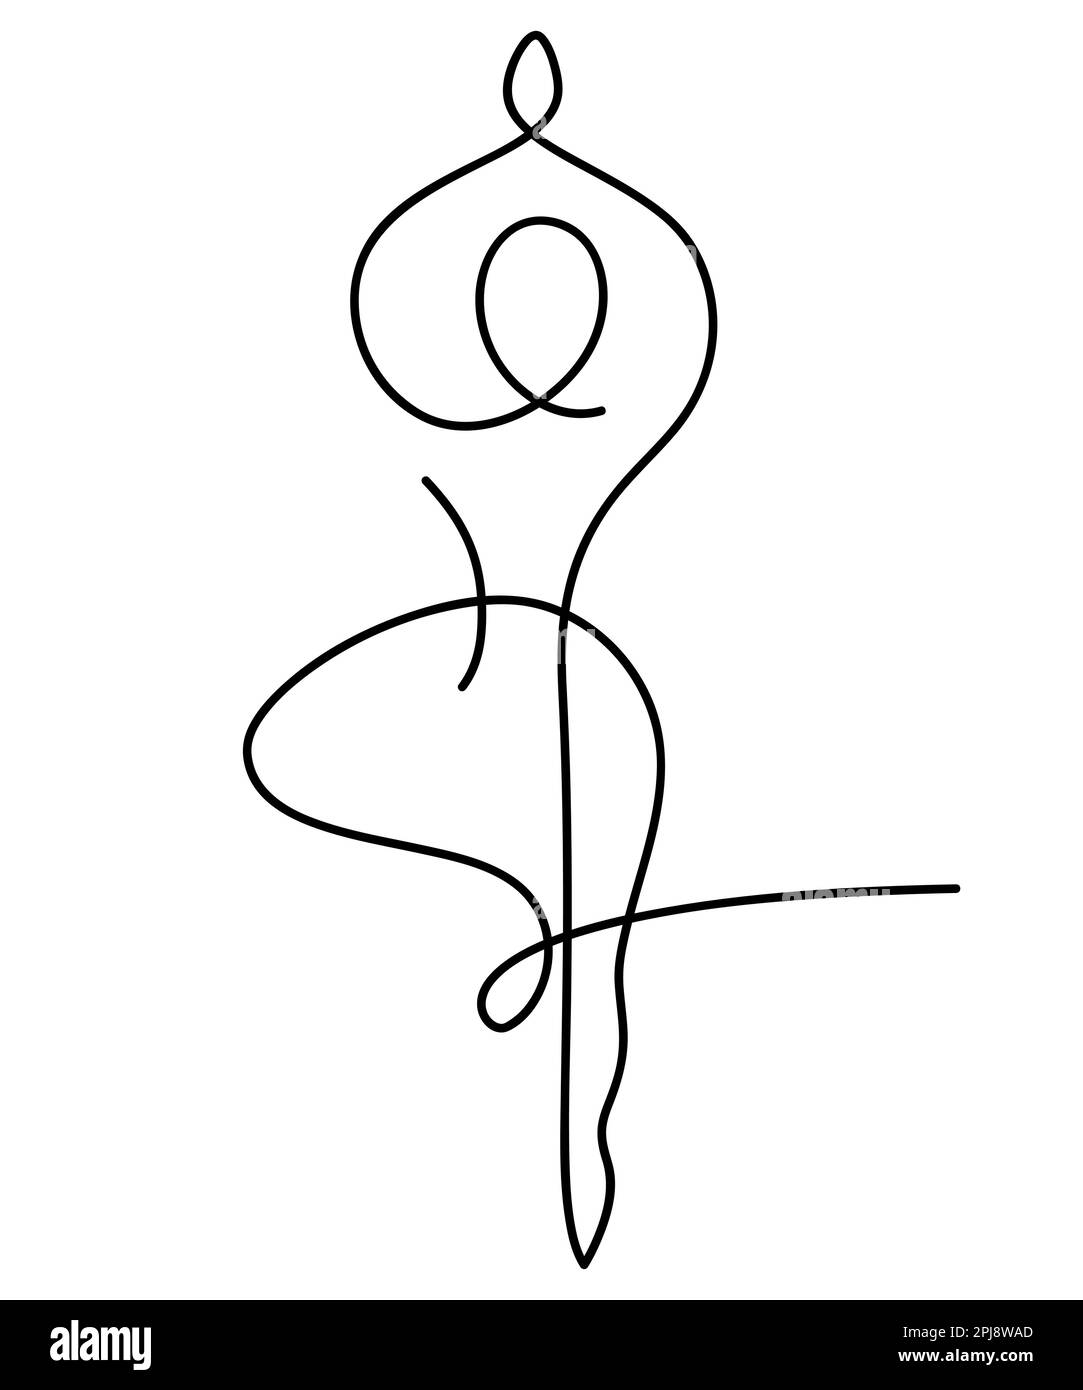 Yoga one line drawing Woman body shape vector logo Stock Vector